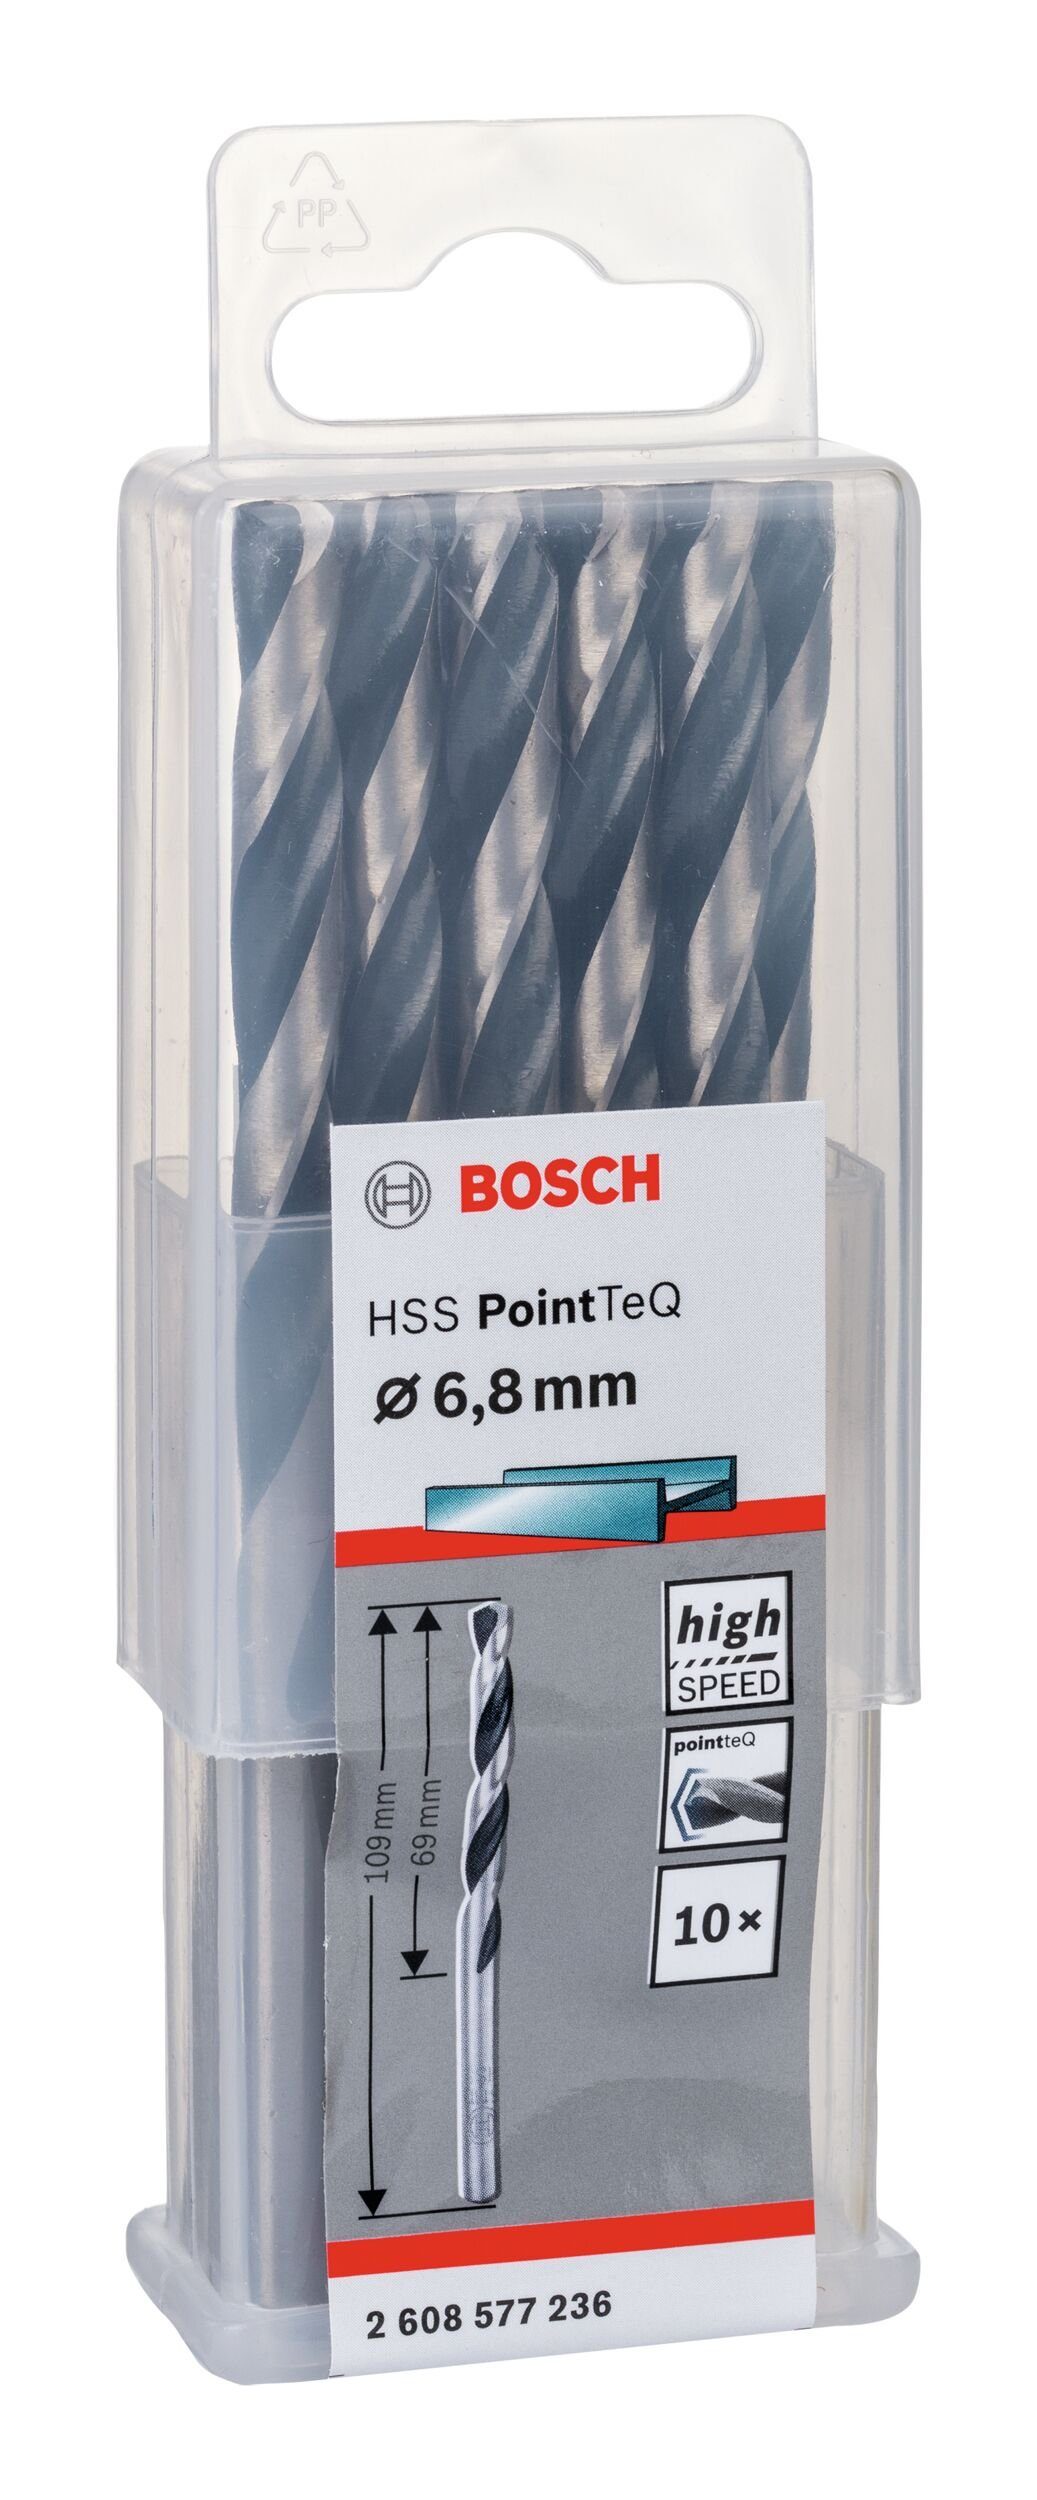 BOSCH 6,8 HSS mm (DIN Metallbohrer, PointTeQ 10er-Pack (10 - Metallspiralbohrer 338) - Stück),